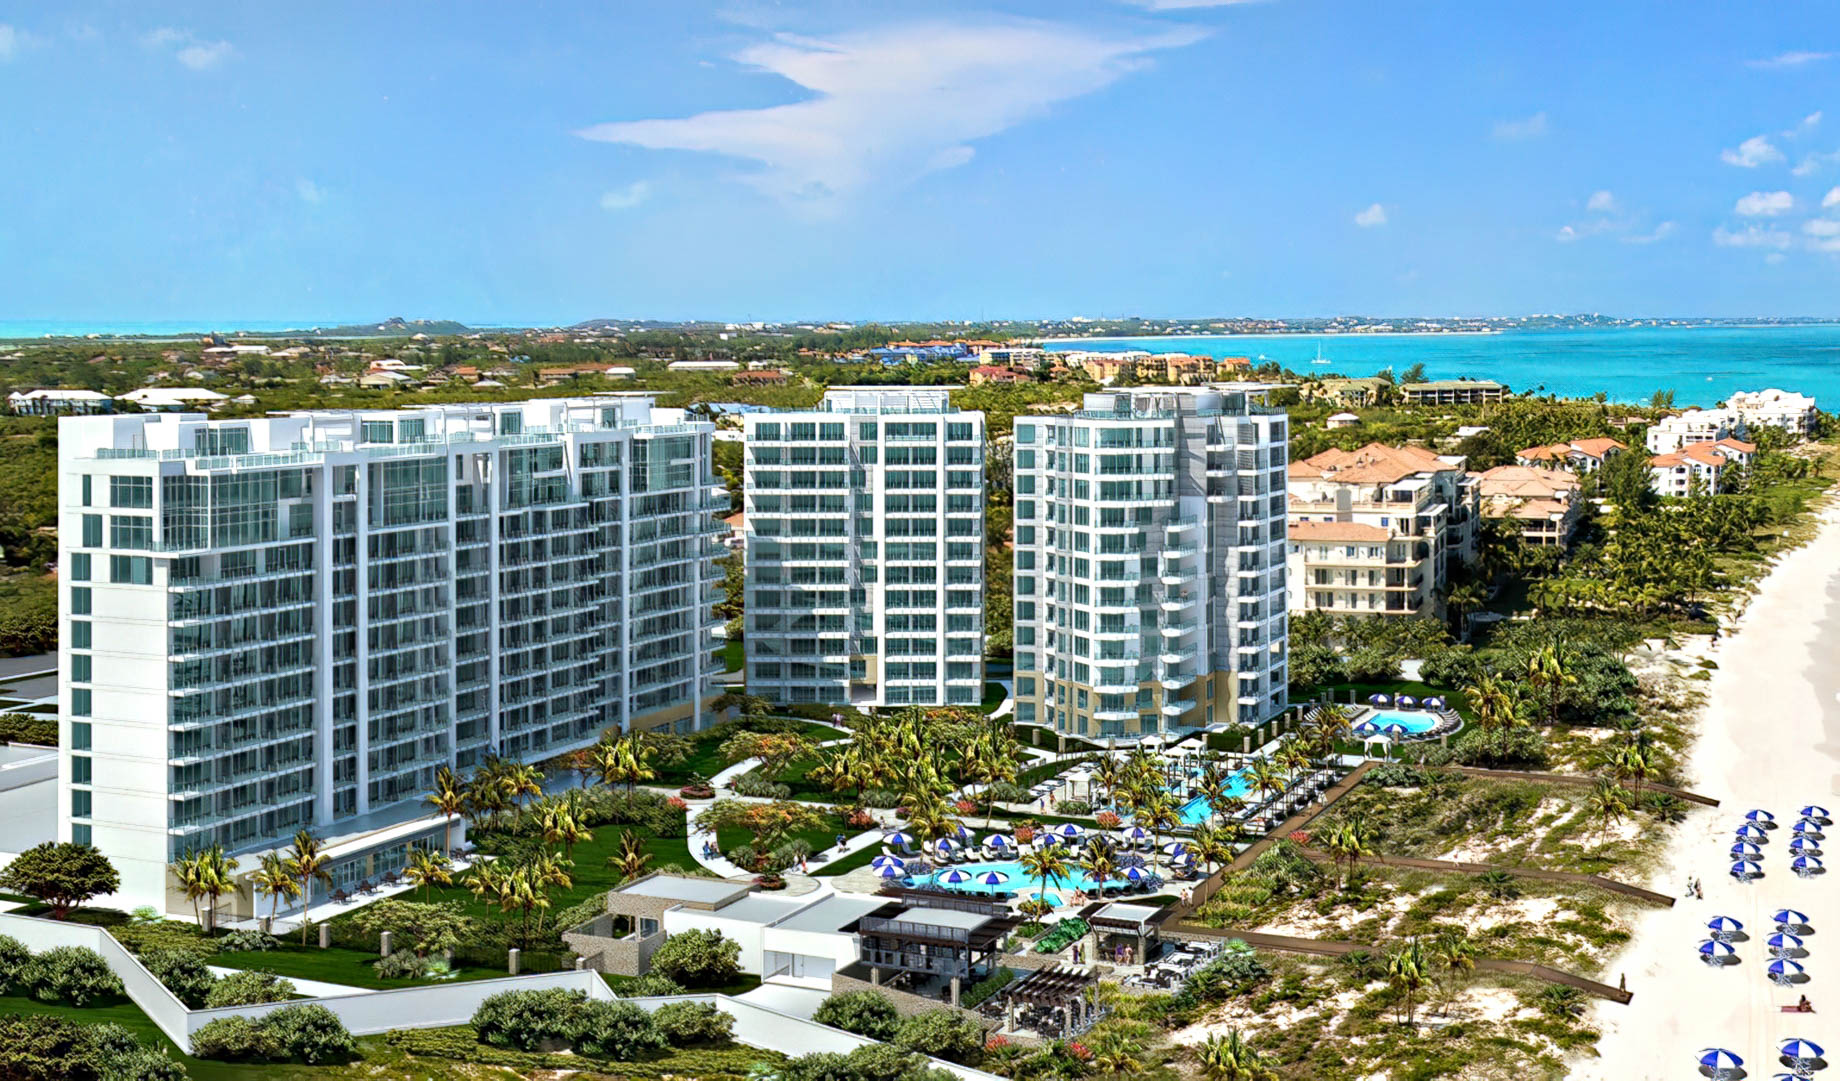 The Ritz-Carlton, Turks & Caicos Resort – Providenciales, Turks and Caicos Islands – Exterior Aerial View